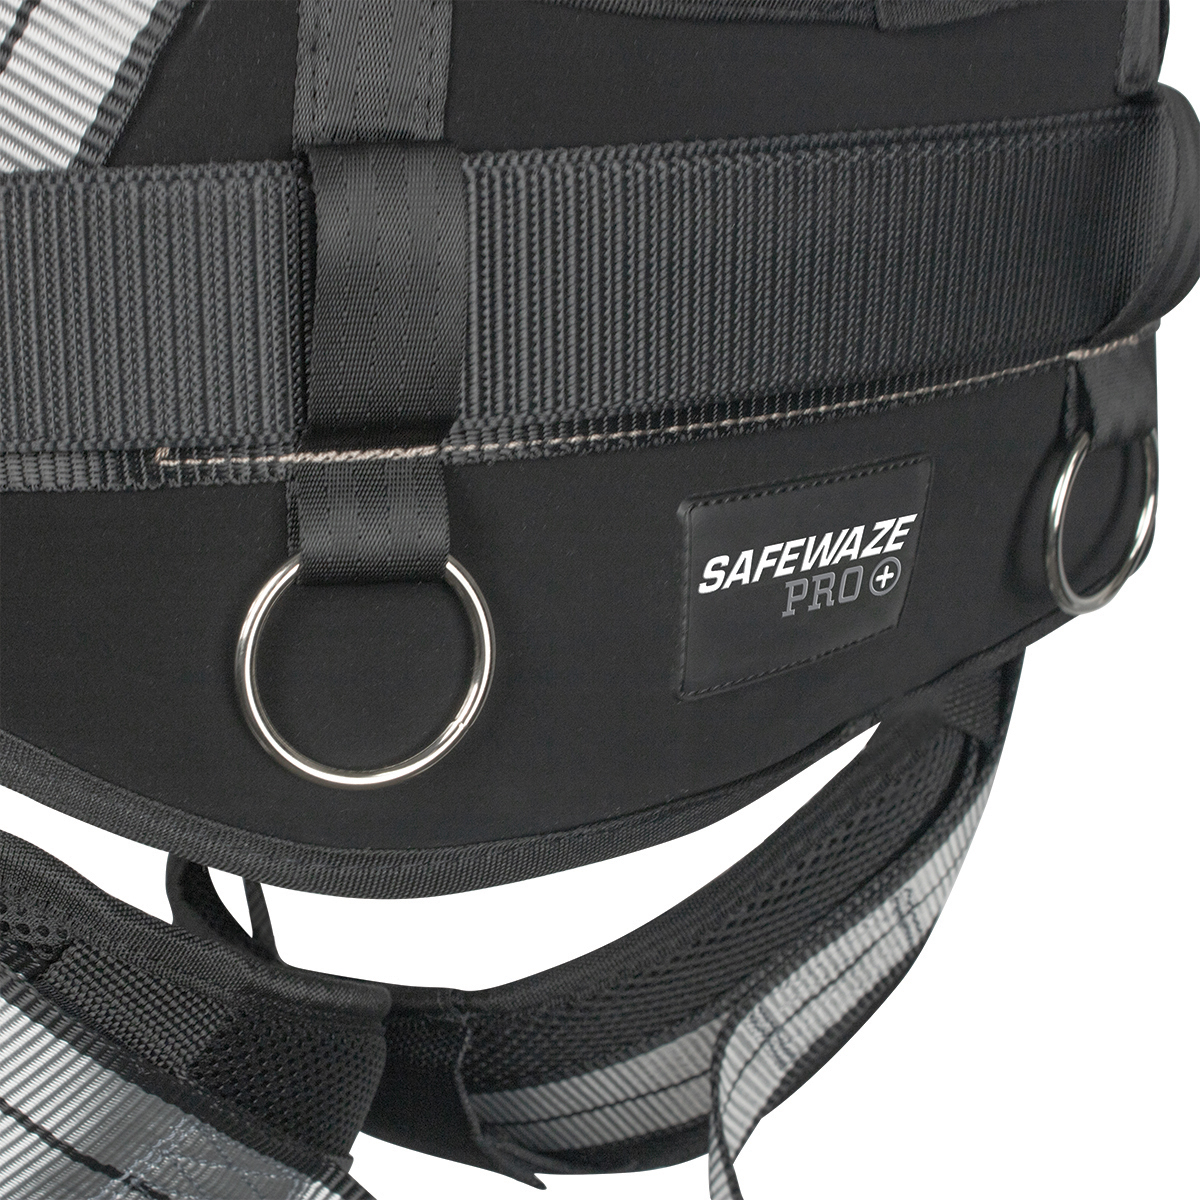 Safewaze PRO + Slate Construction Harness from Columbia Safety